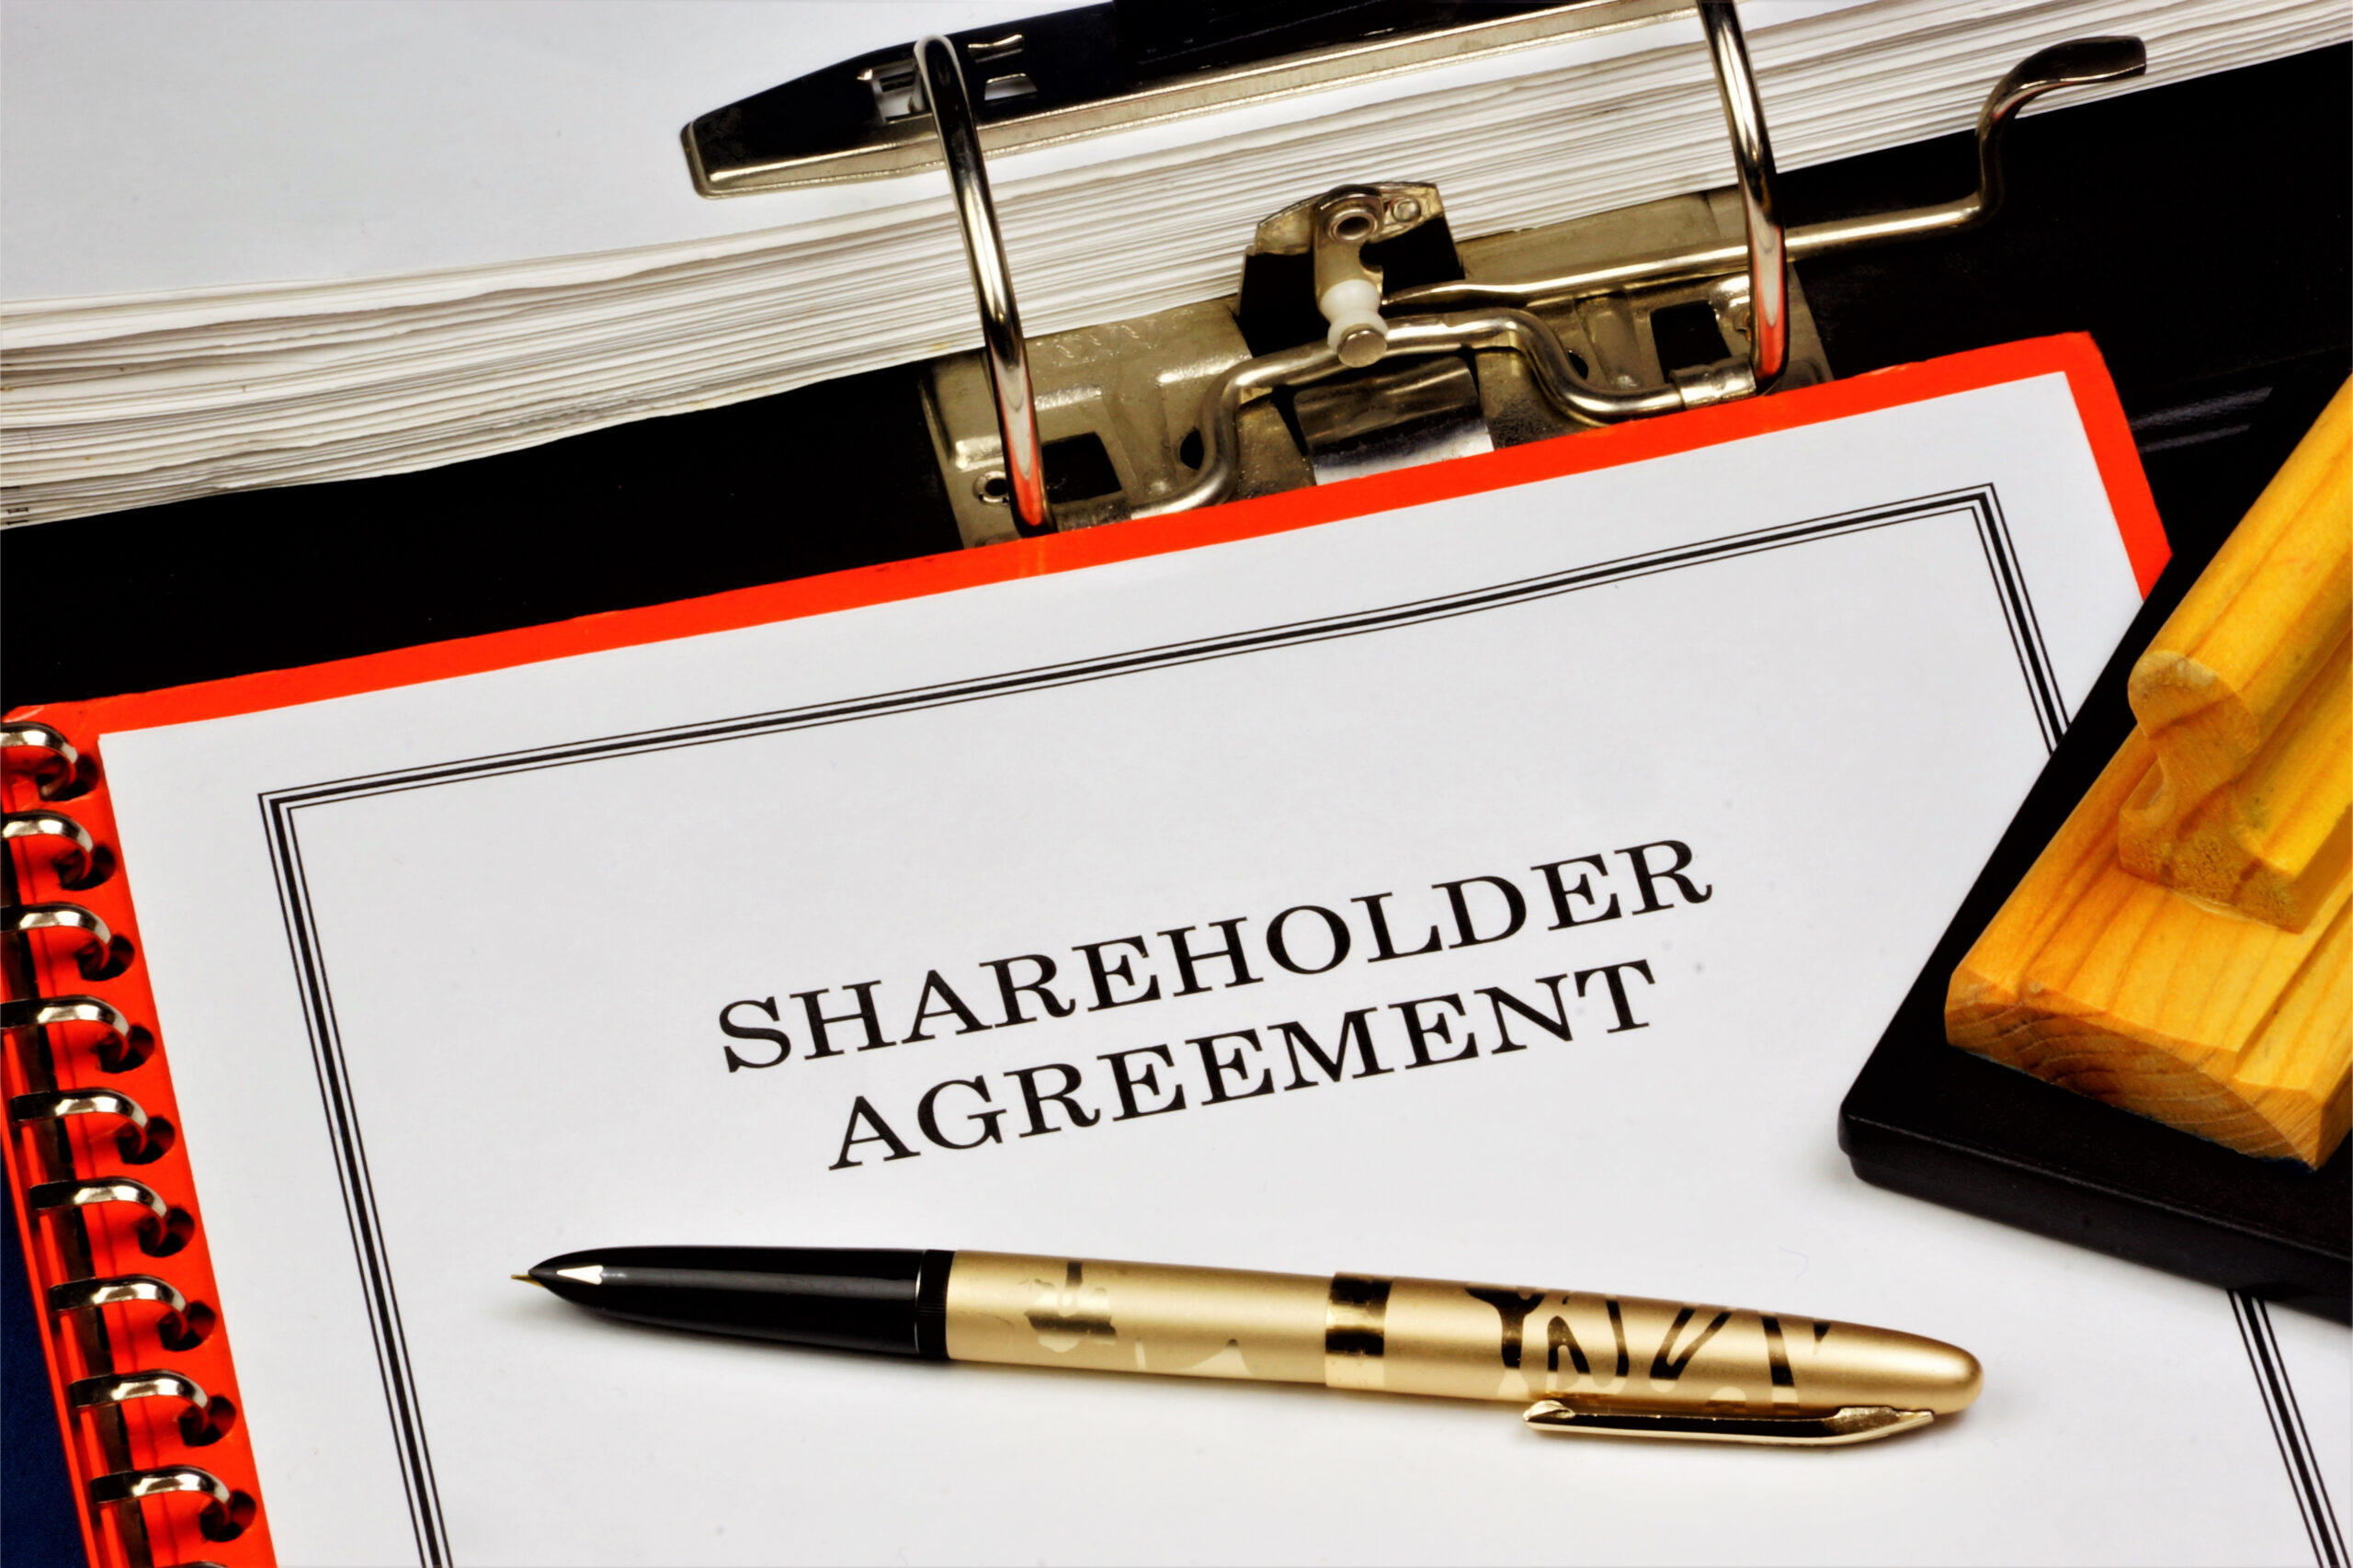 Anatomy of a shareholders document